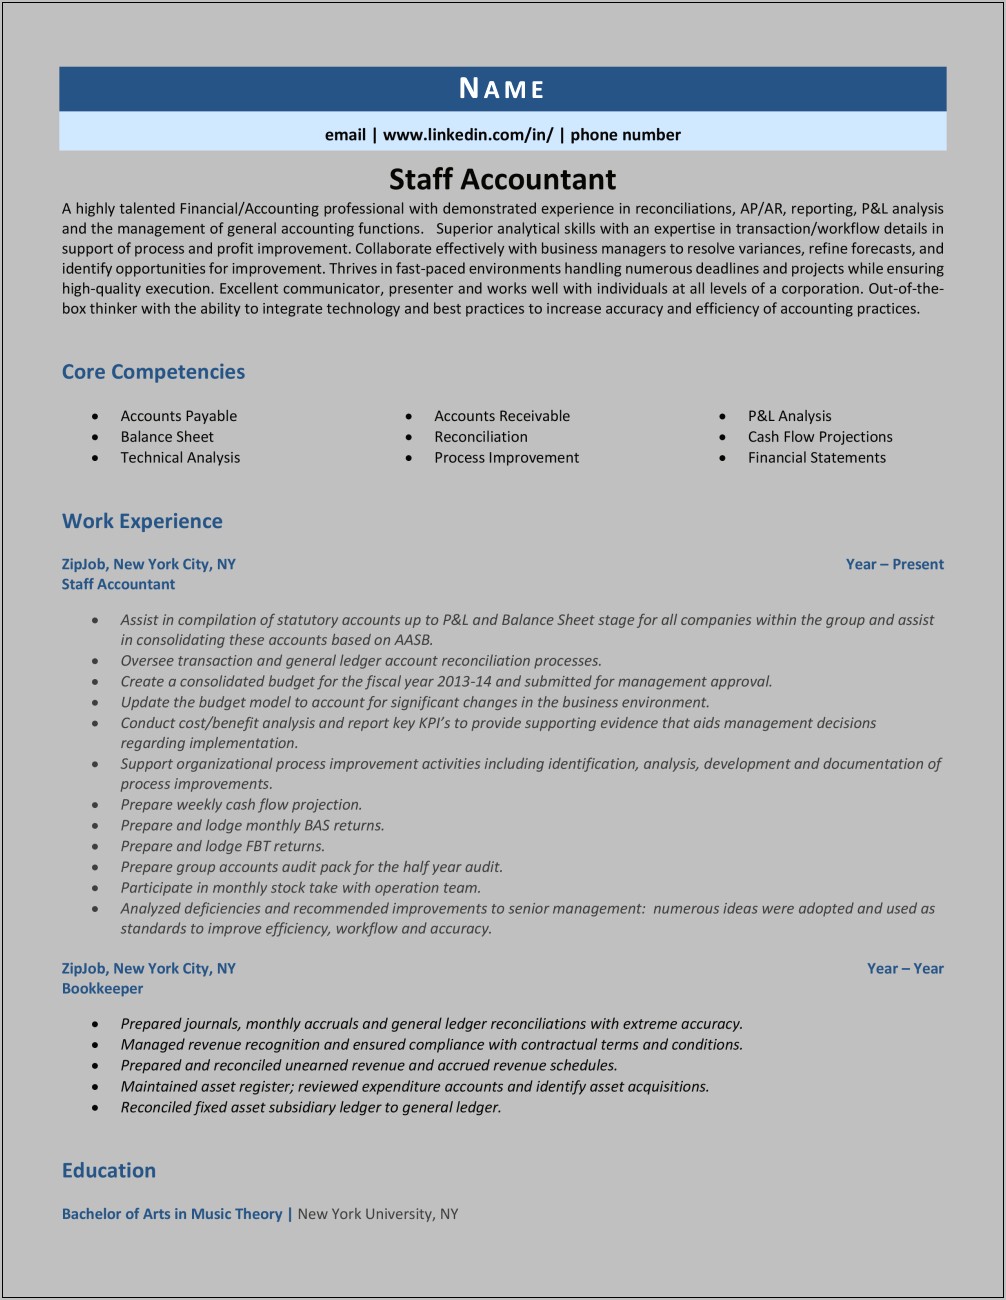 Sample Chronological Resume For Accountant